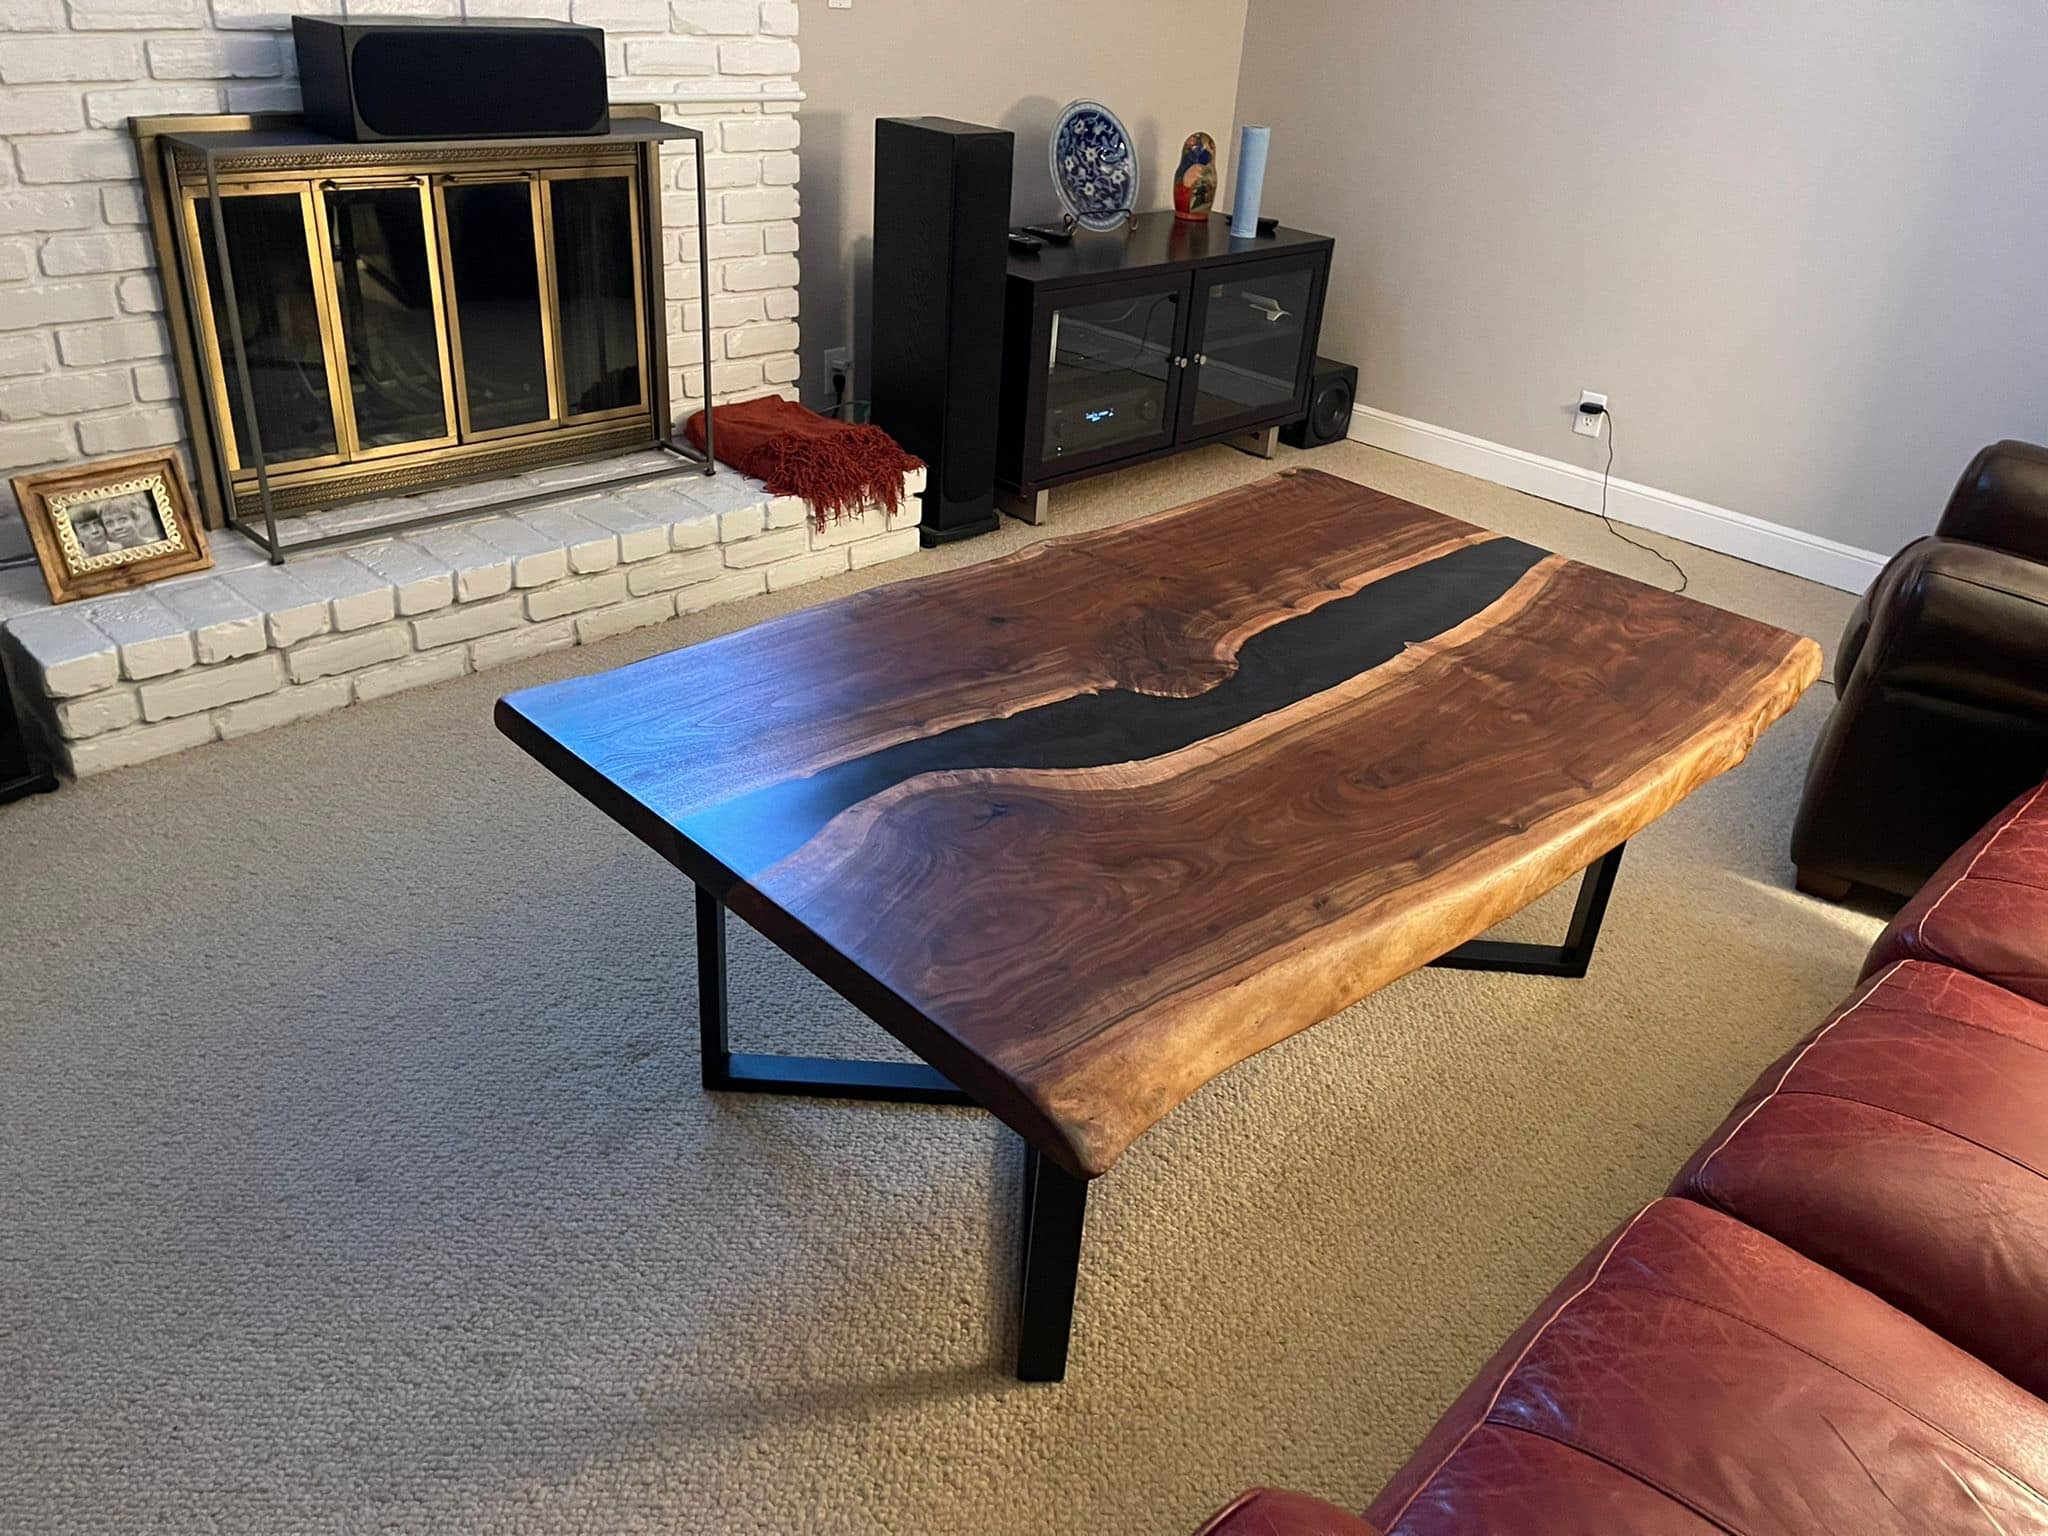 Varnish a Wood Table!